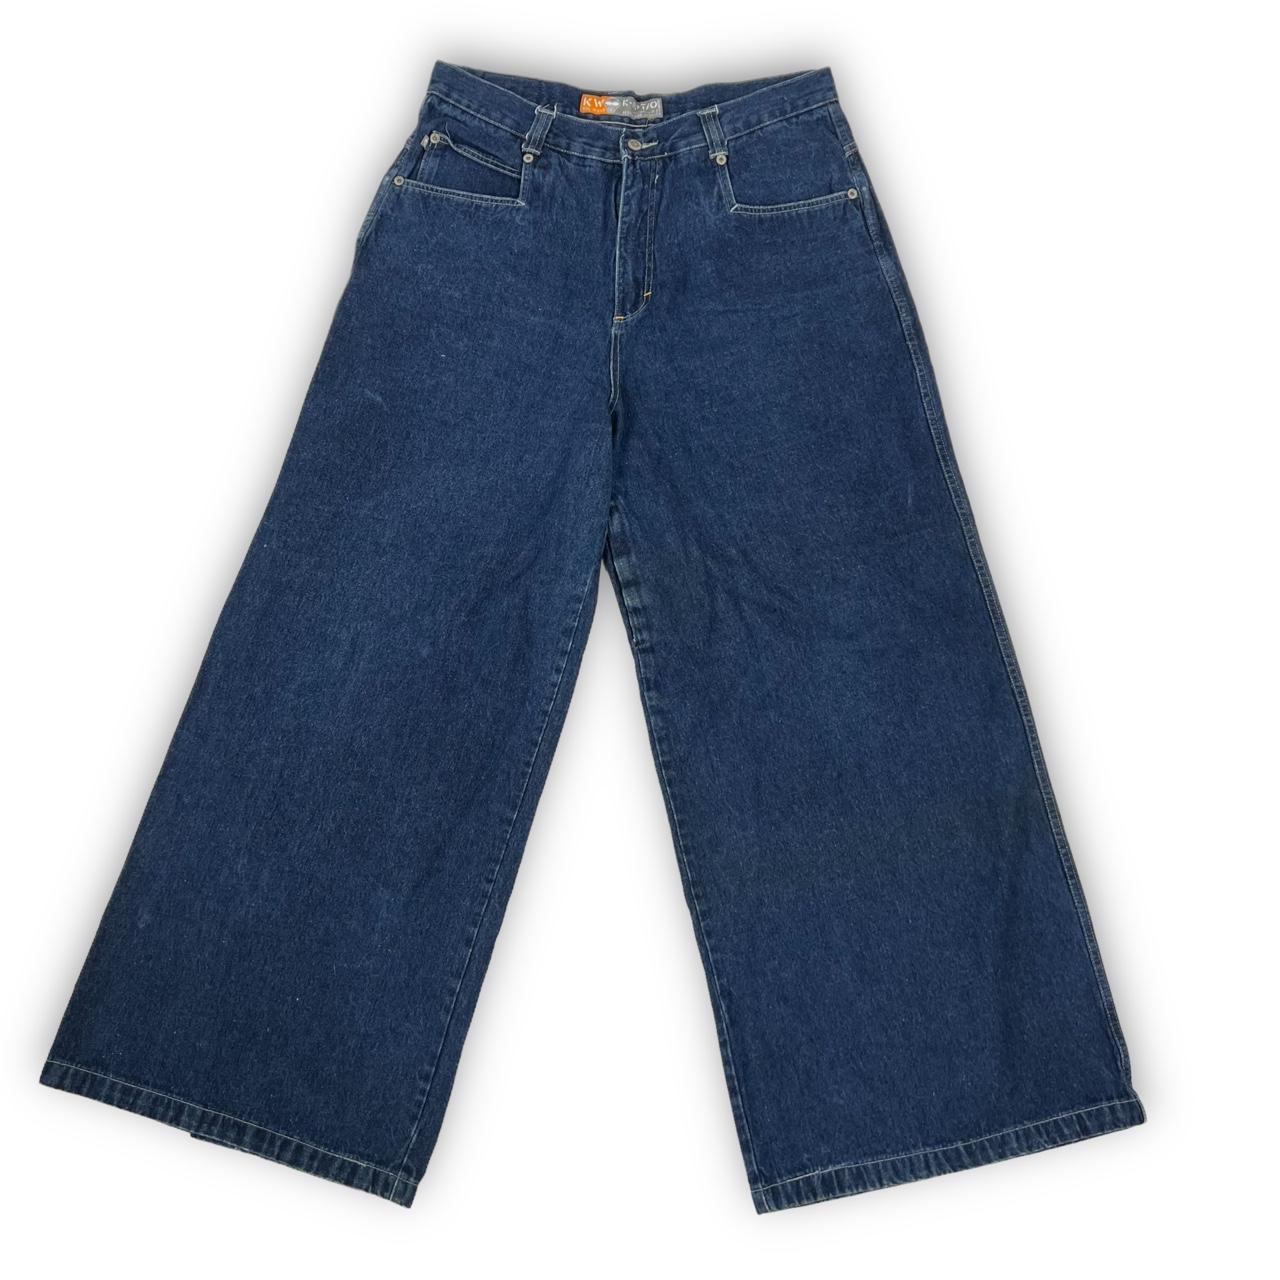 90s/Y2k dark wash kikwear rave jeans. Has a hidden... - Depop